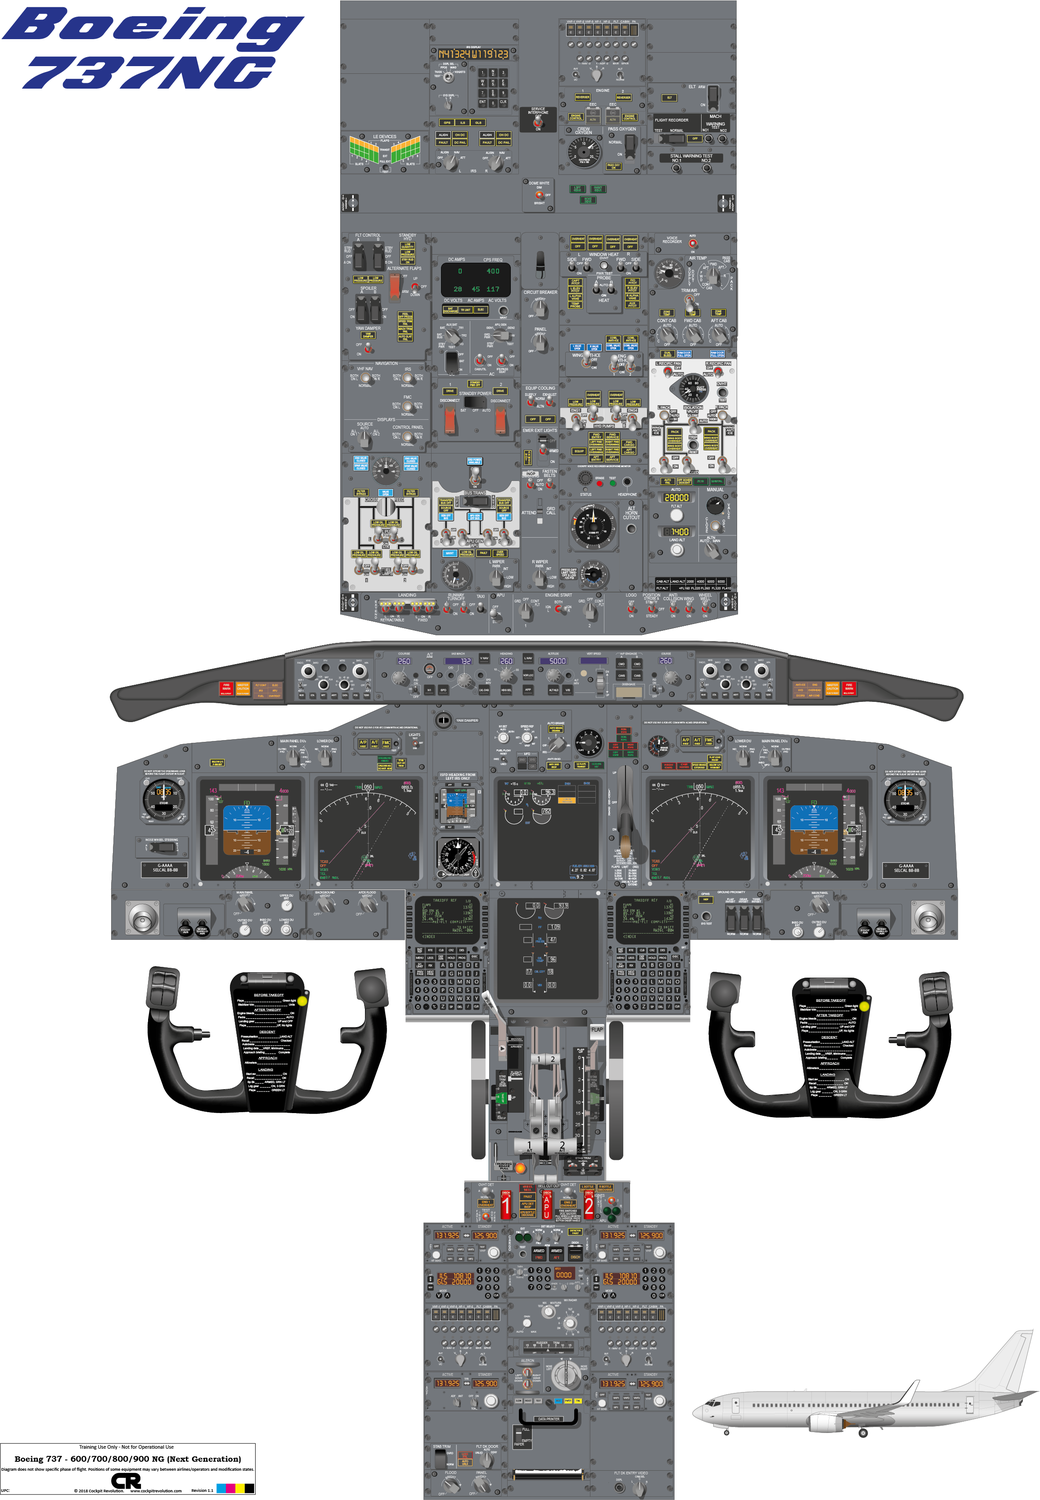 Boeing 737-600/700/800/900 NG Cockpit Poster - Printed